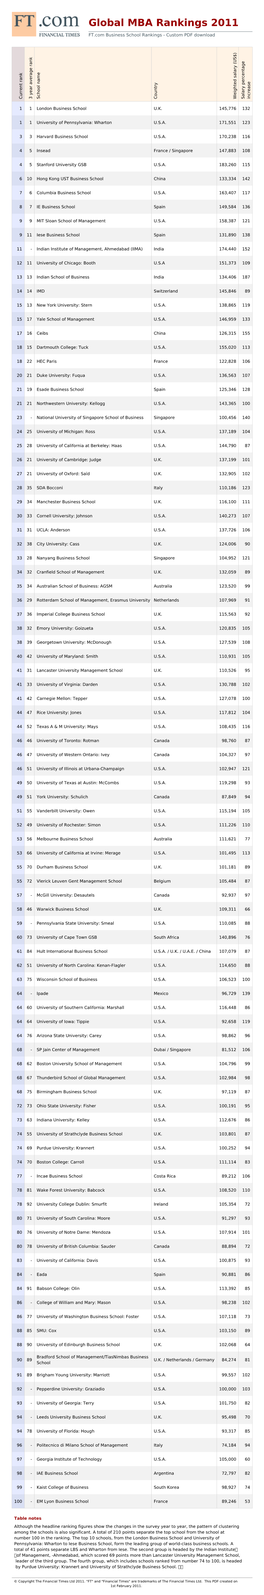 Global MBA Rankings 2011